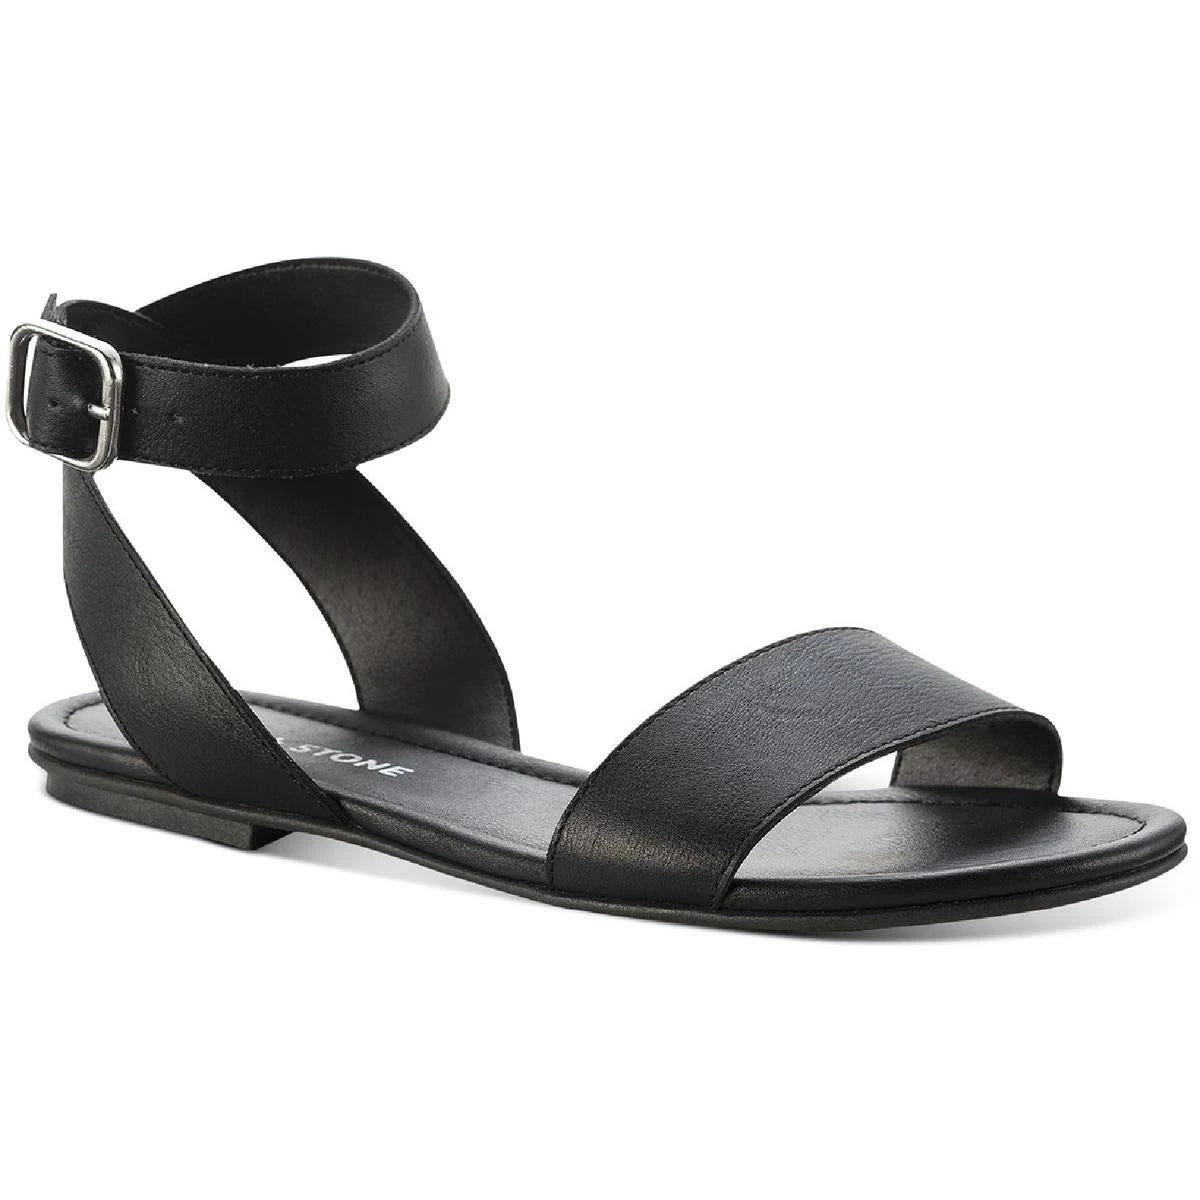 Stylish Faux Leather Flat Sandals for Women - Black, Size 5.5 | Image